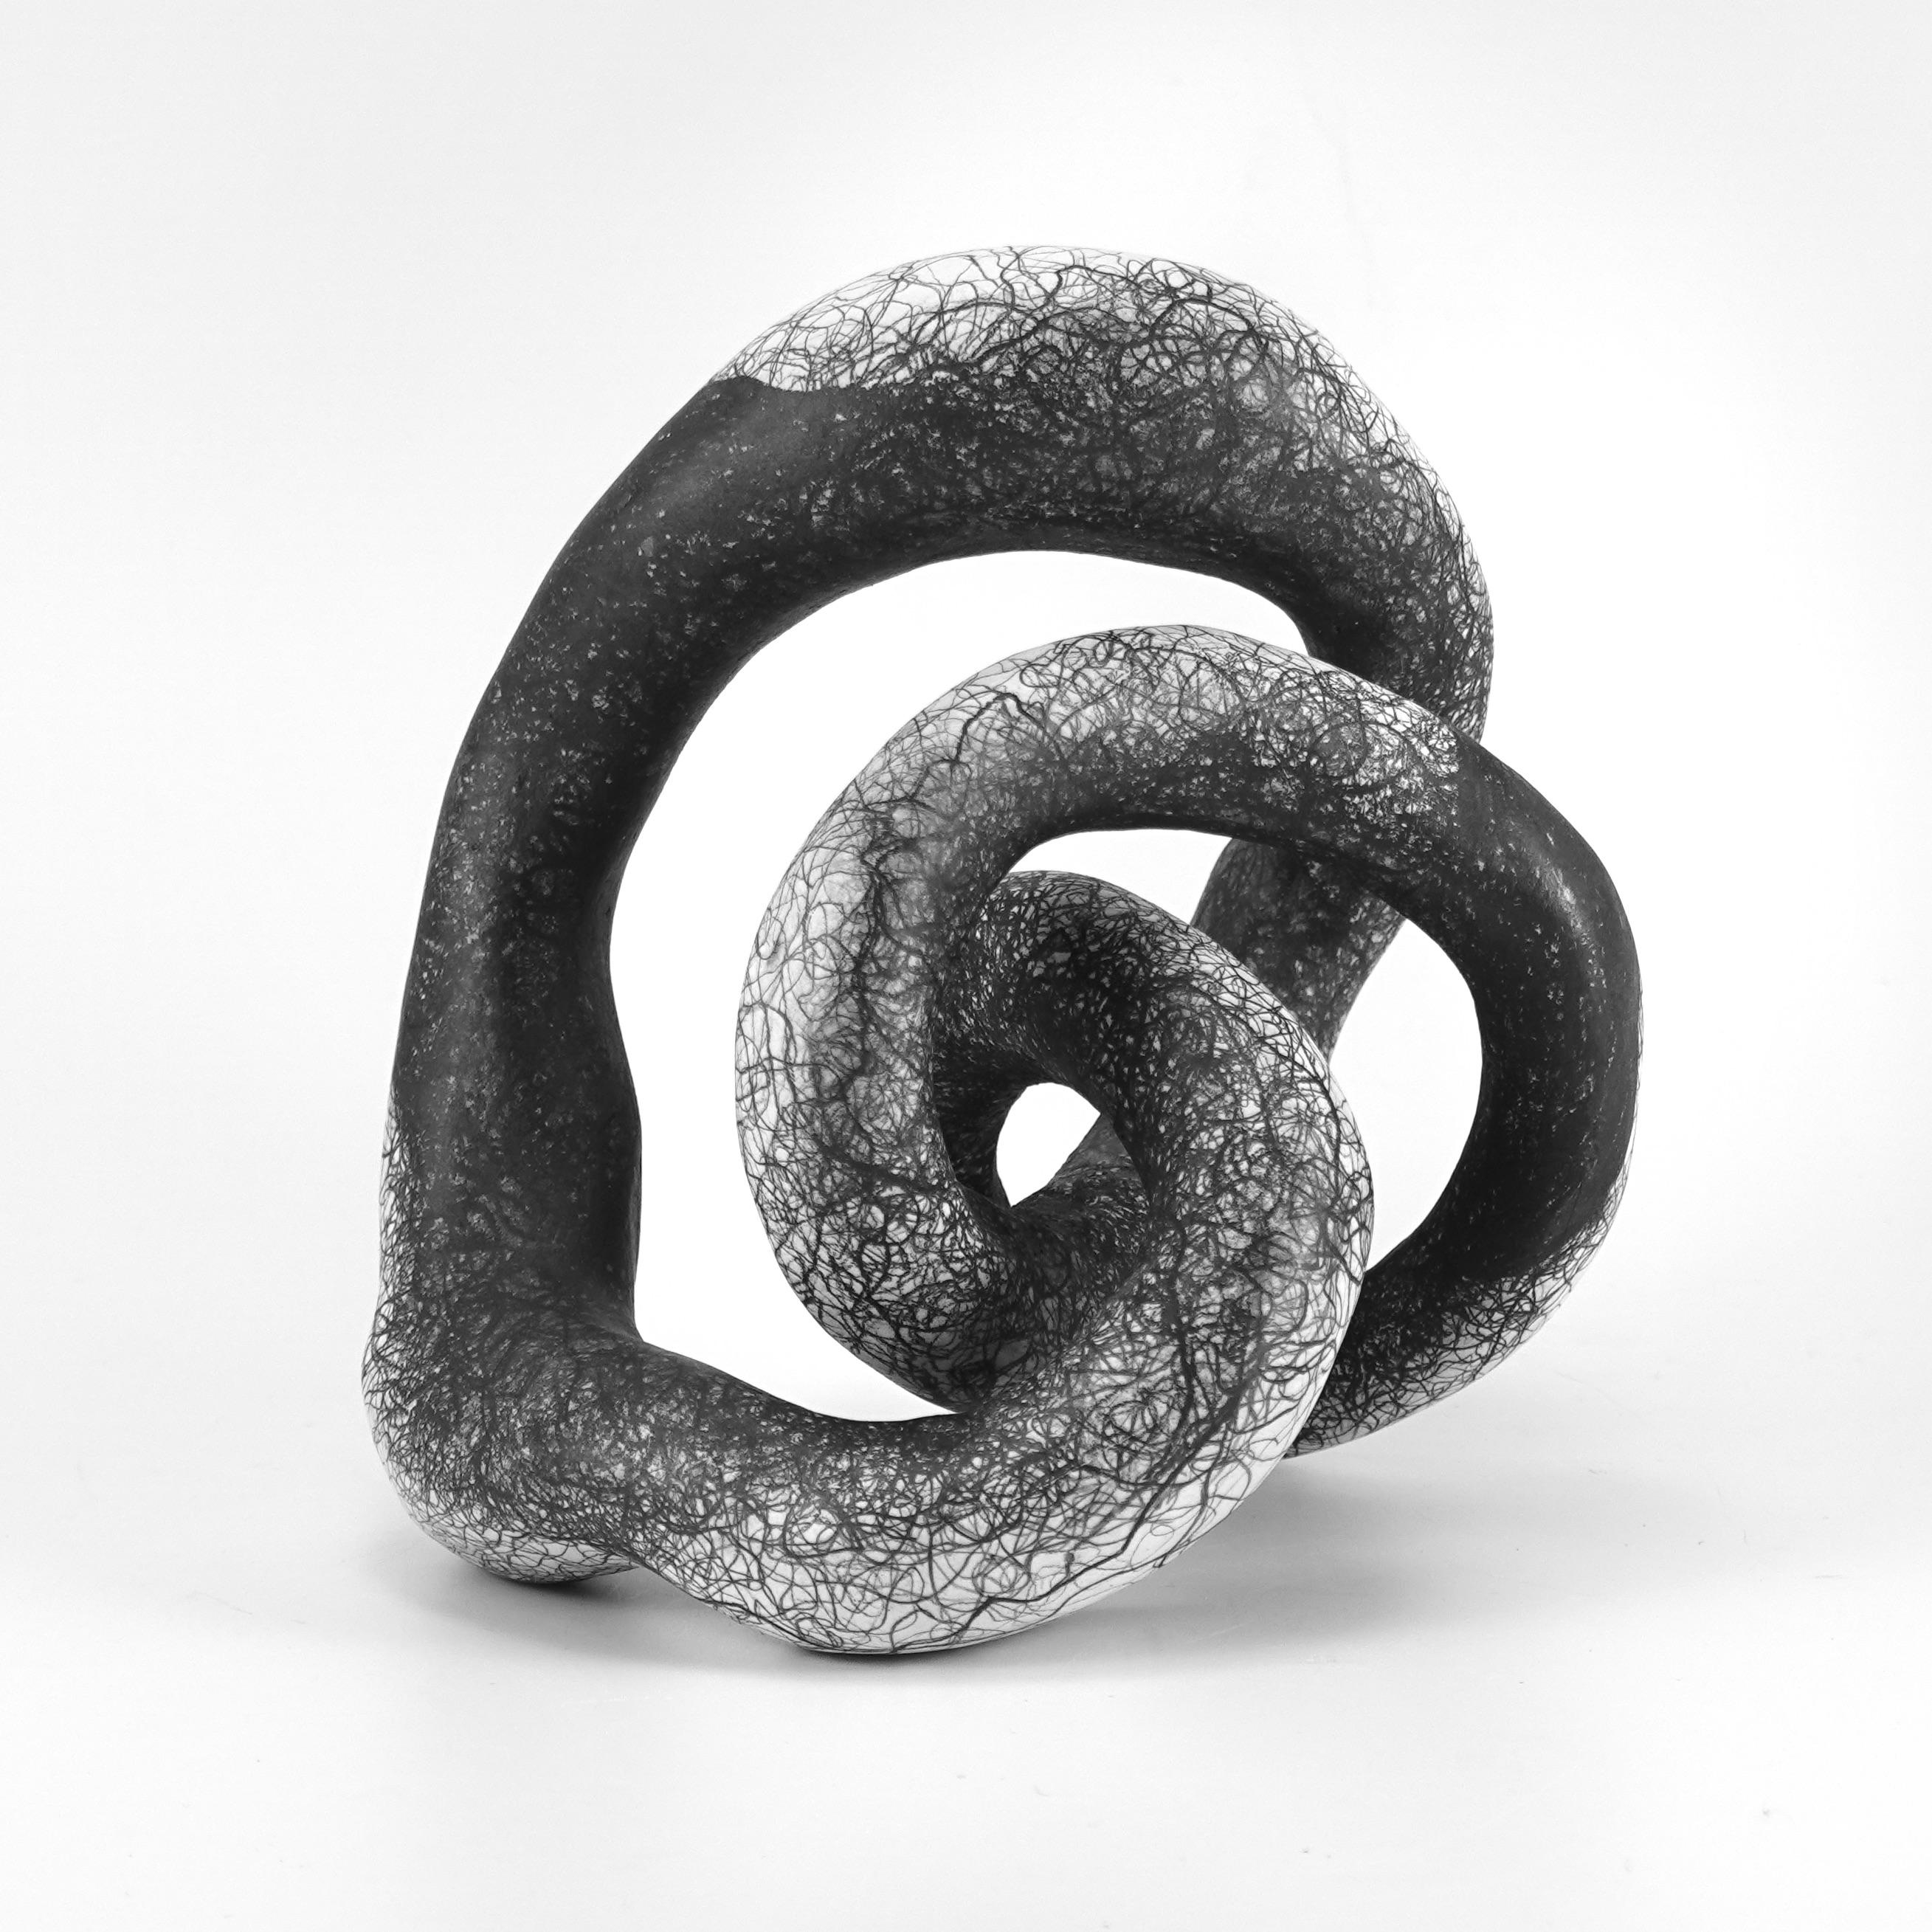 Abstract Sculpture Judi Tavill - Sculpture abstraite minimale en noir et blanc : "ENFLEX".